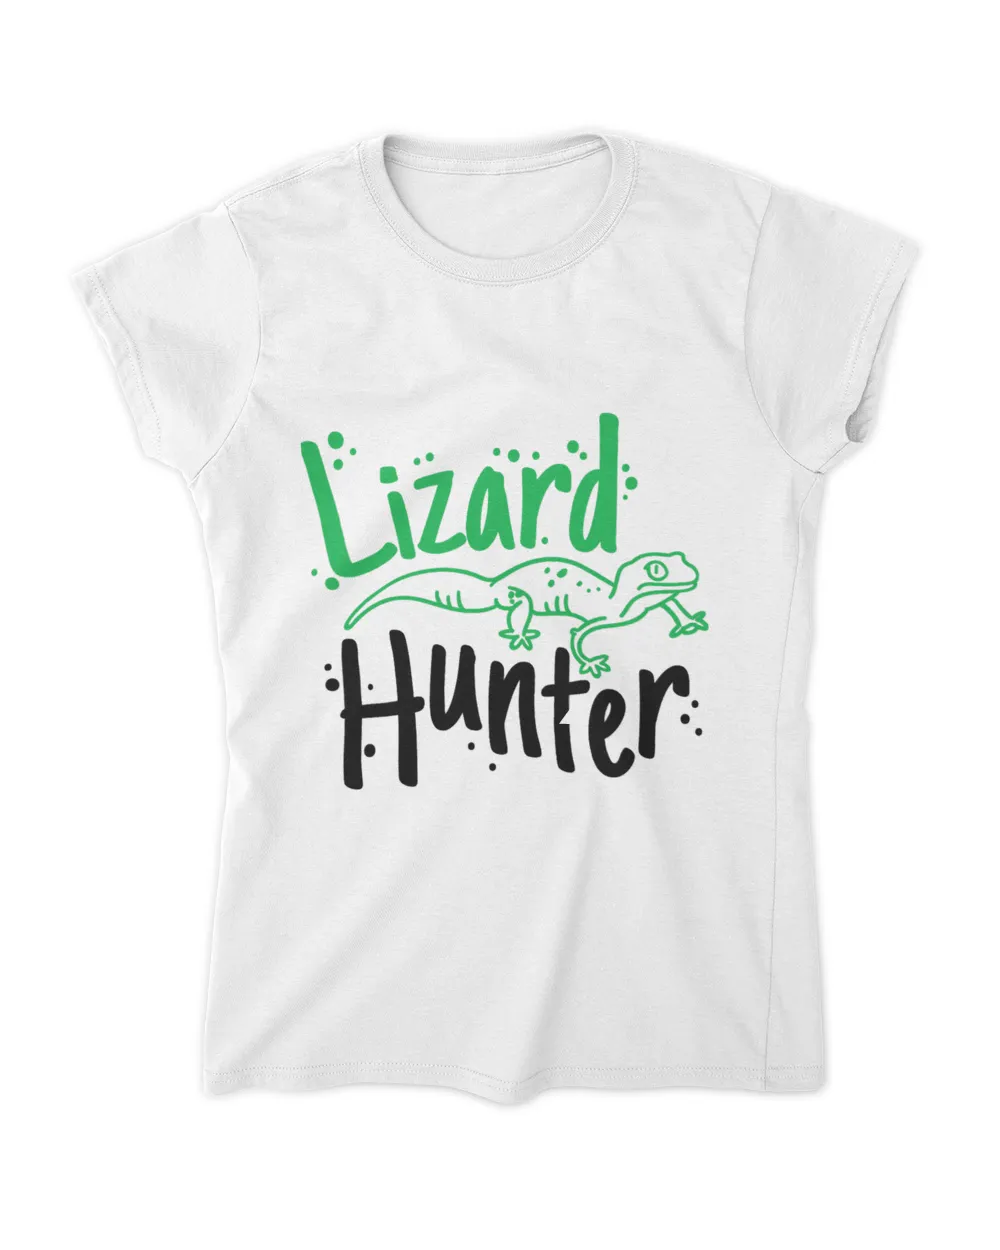 Lizard Hunter 2Anole Reptile 21